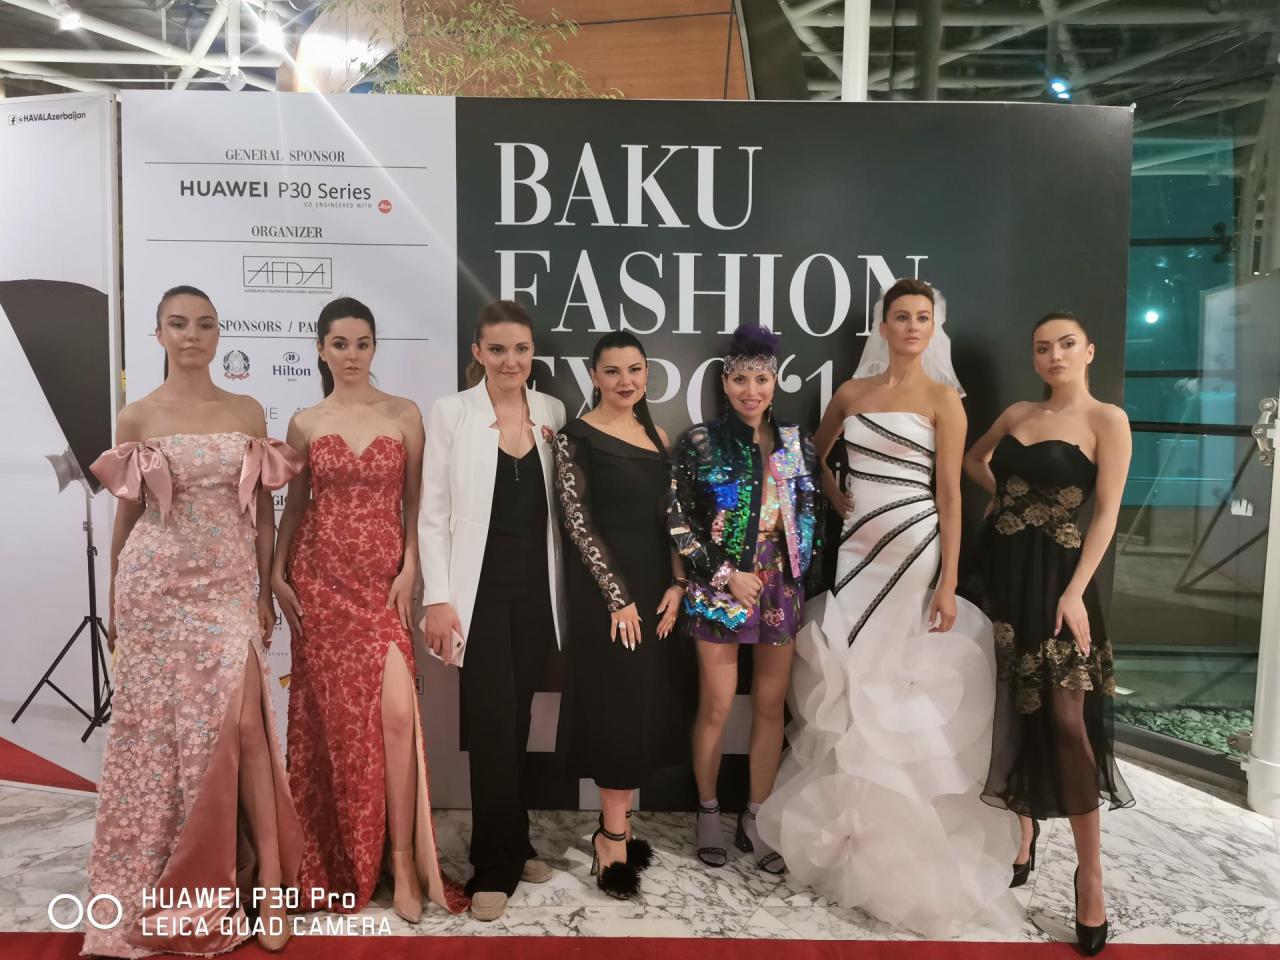 Baku Fashion Expo 2019 captivates fashionistas [PHOTO/VIDEO]